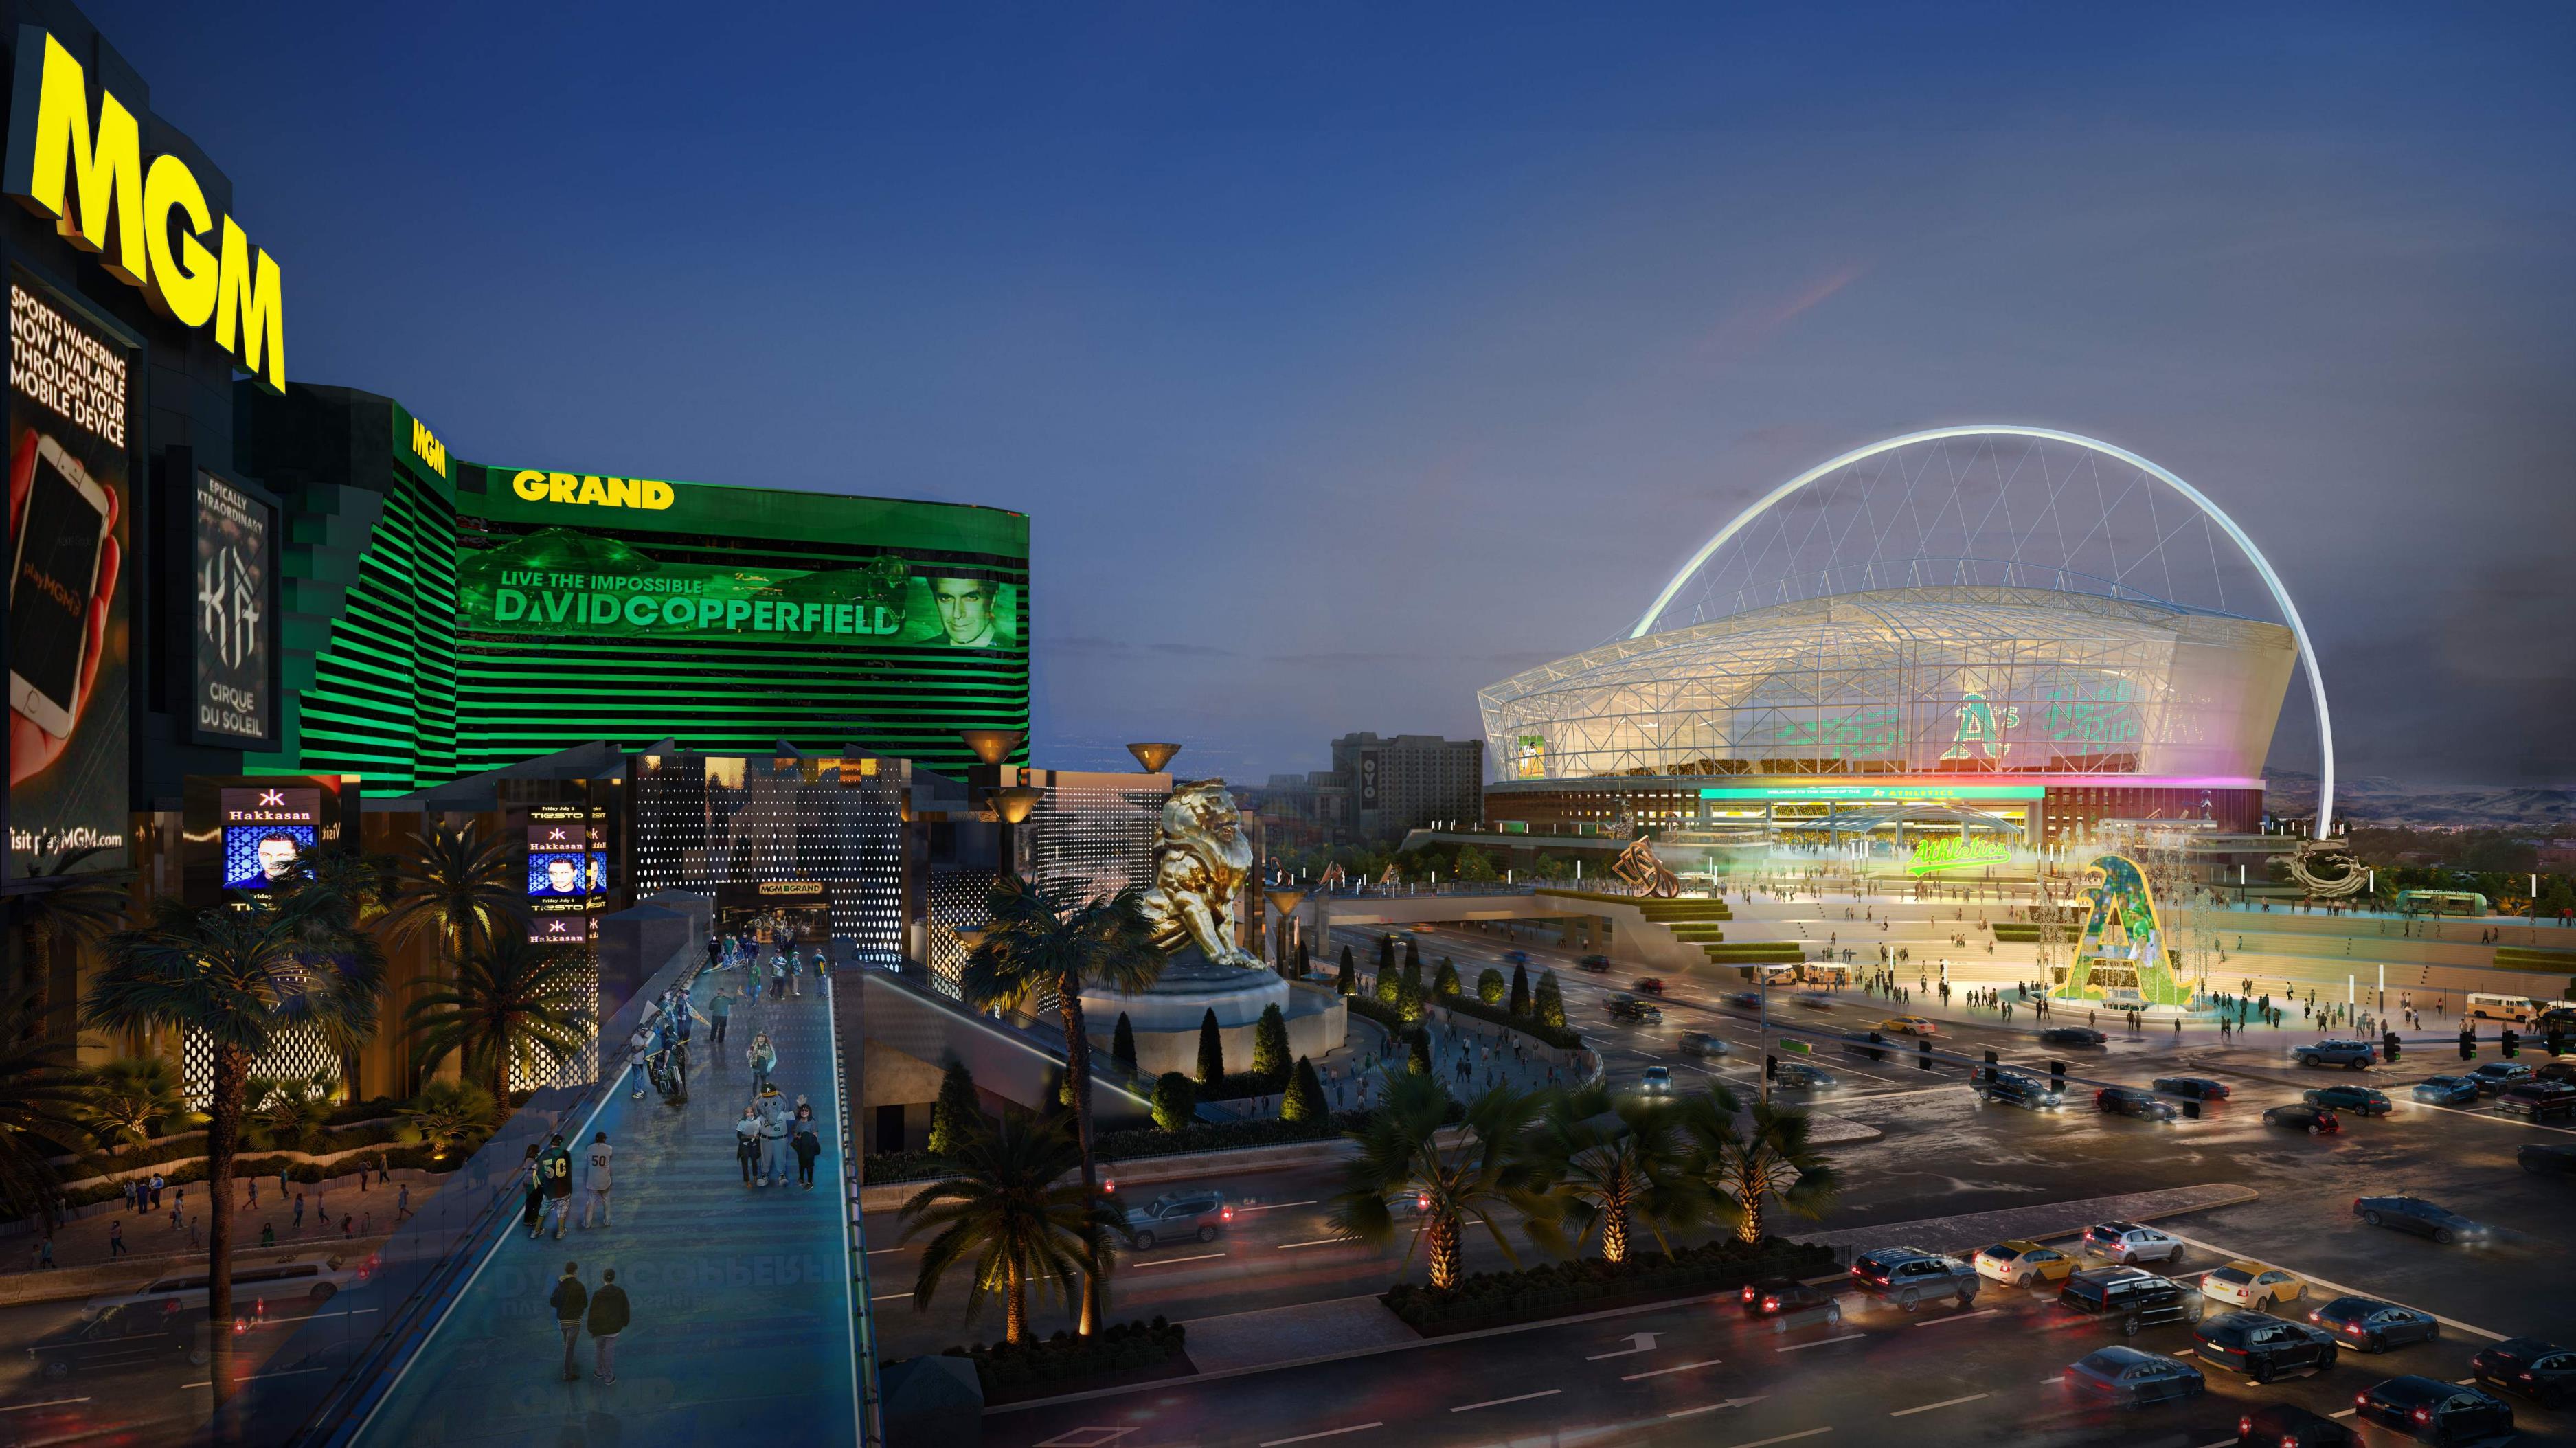 Athletics' plan for Las Vegas ballpark clears major hurdle